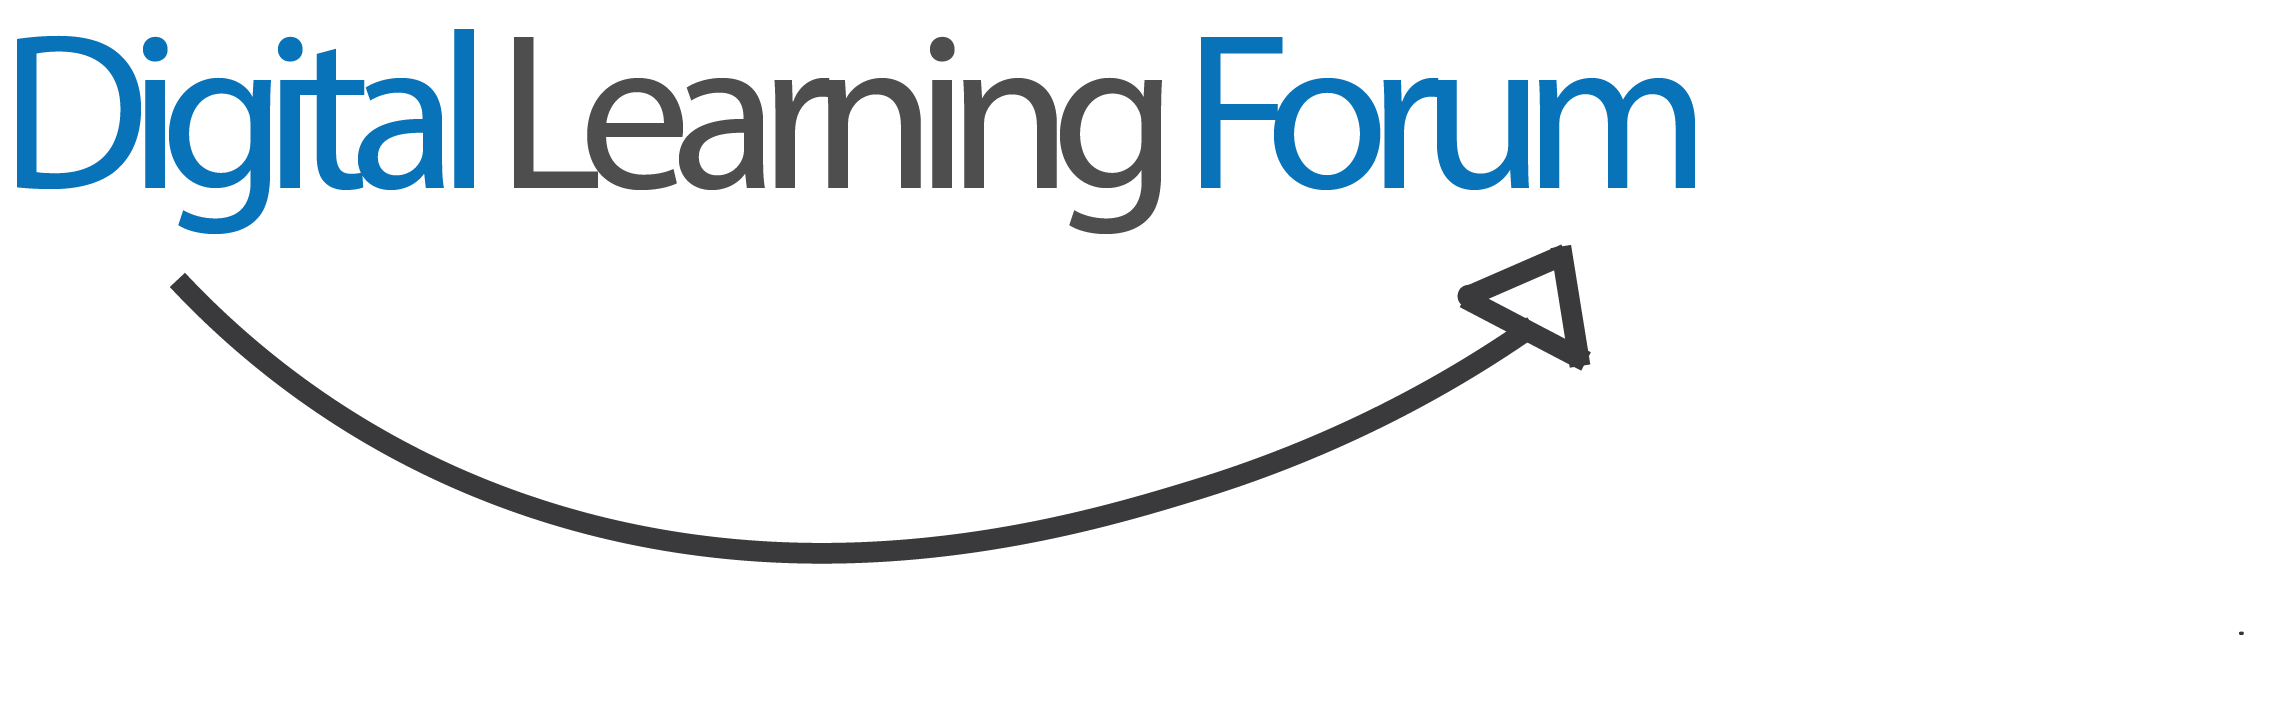 Digital Learning Forum